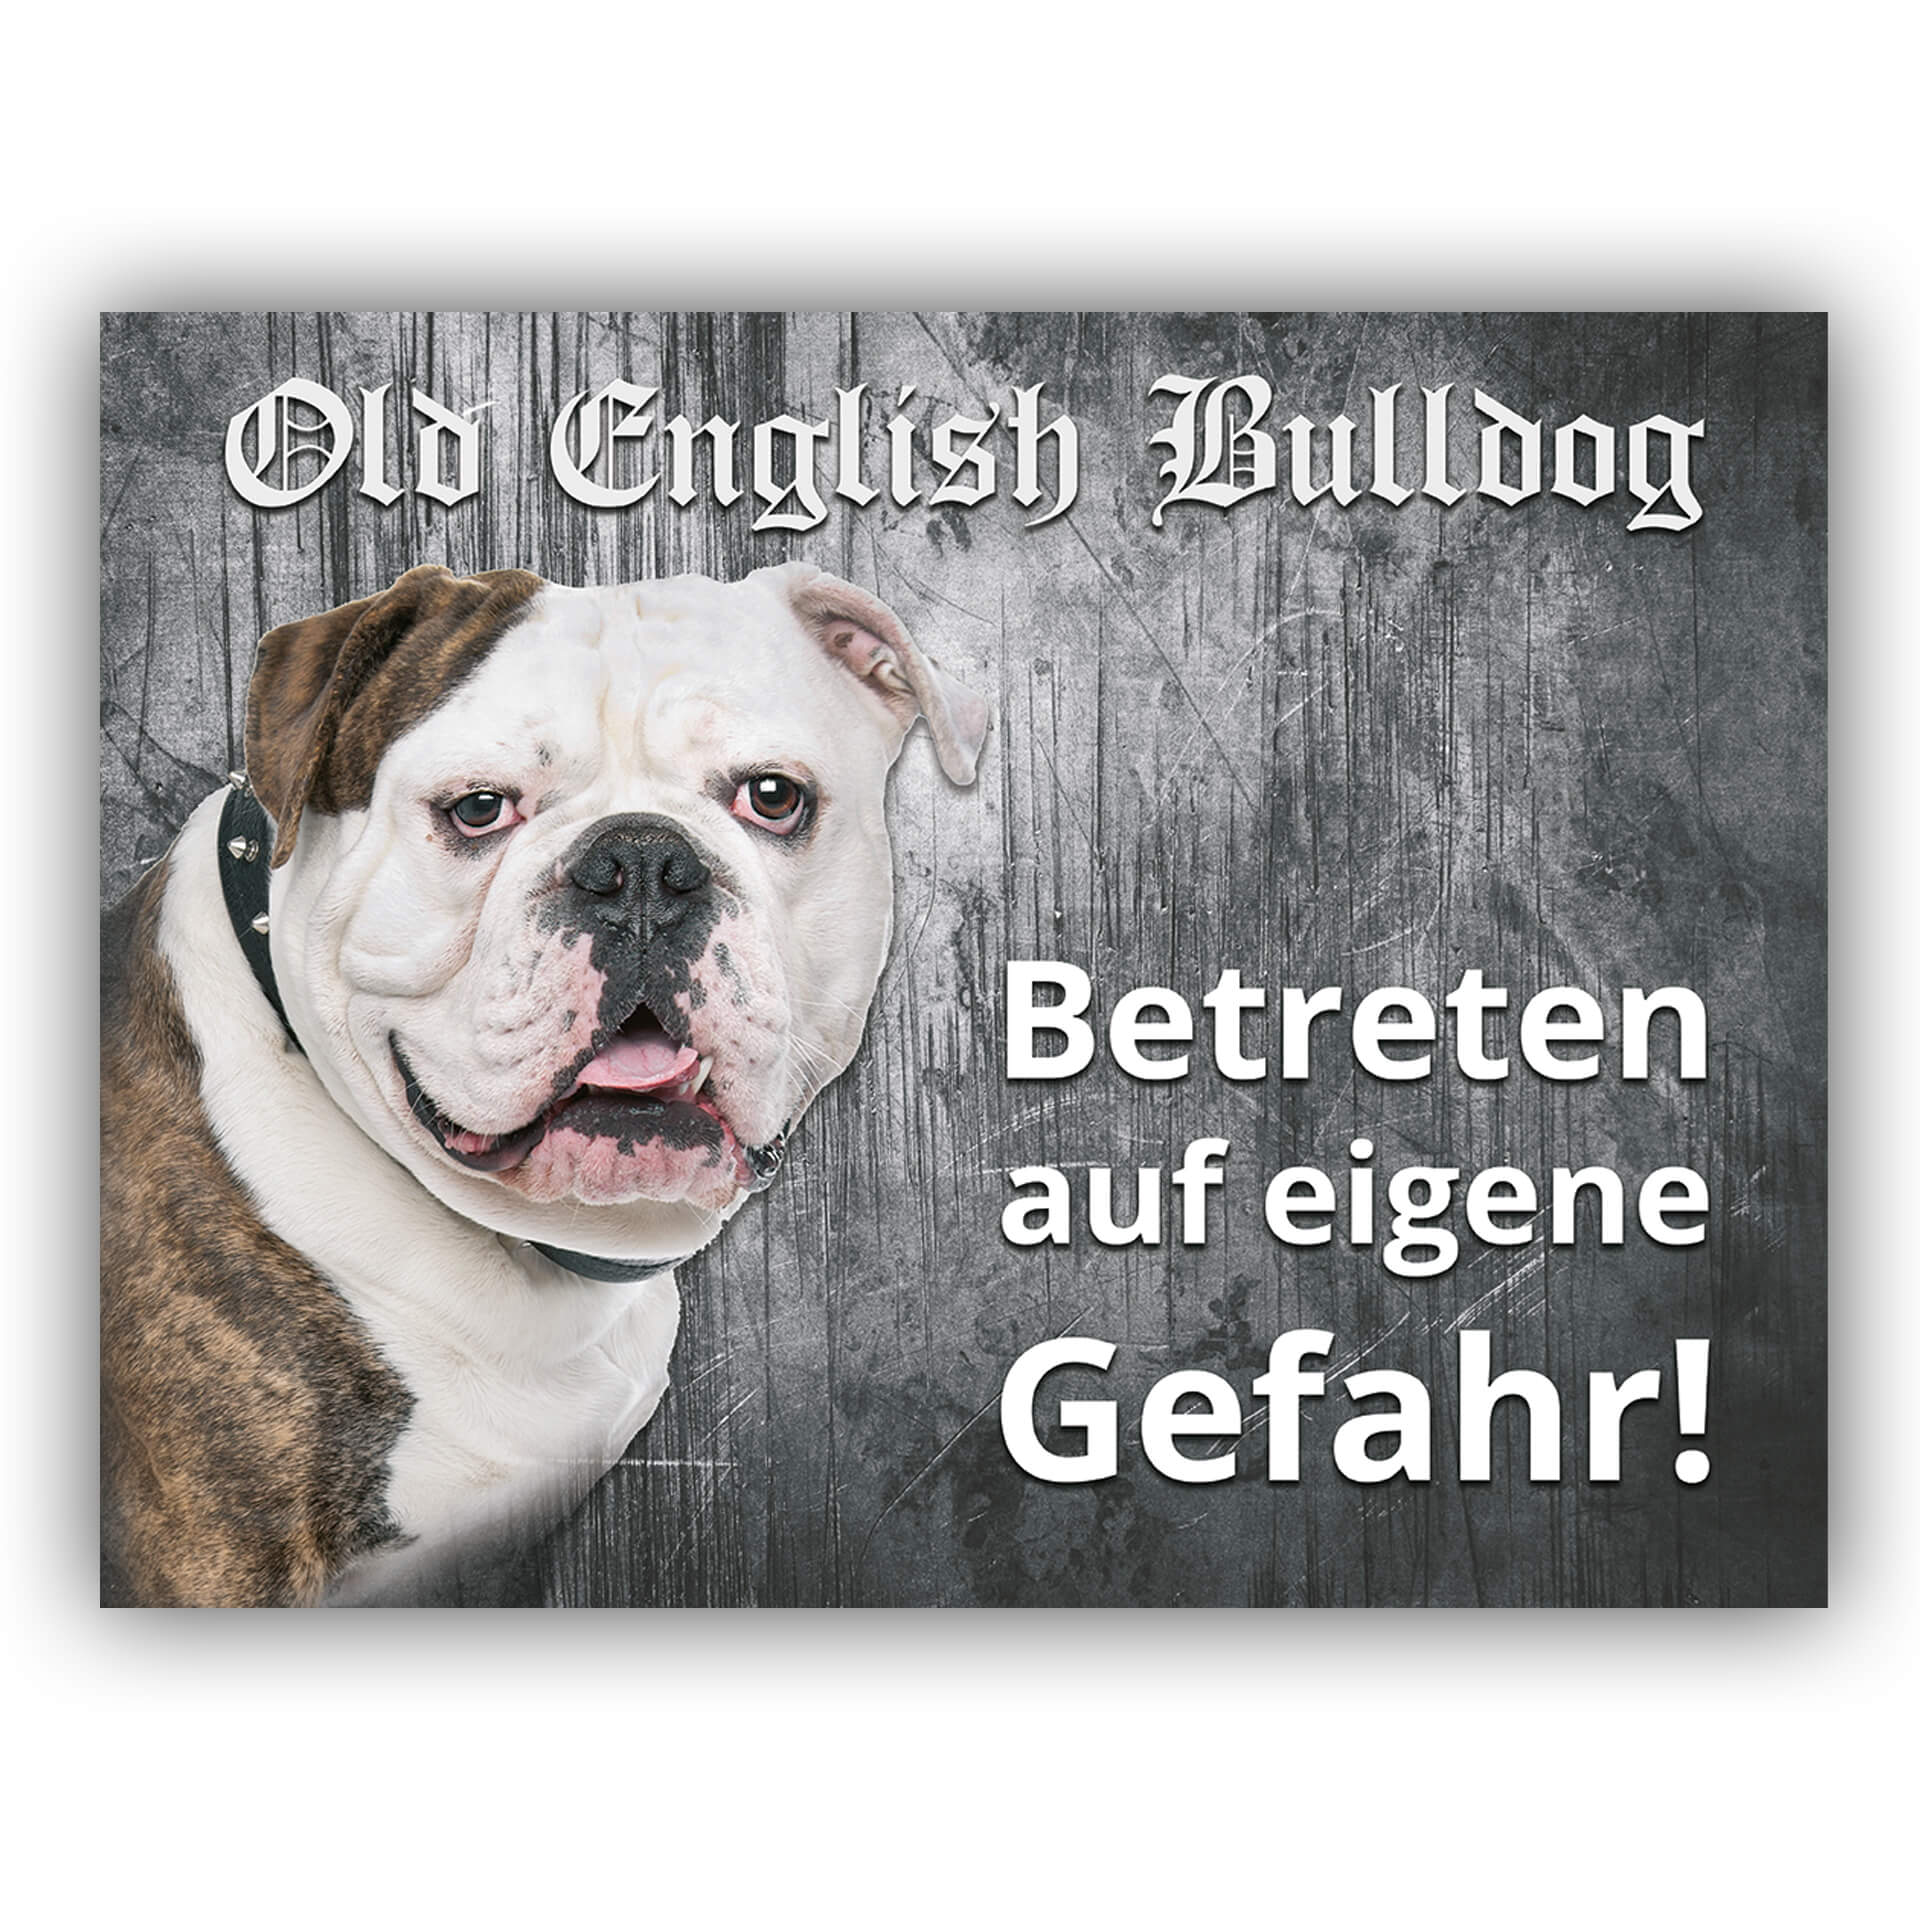 Old English Bulldog Schild Grunge